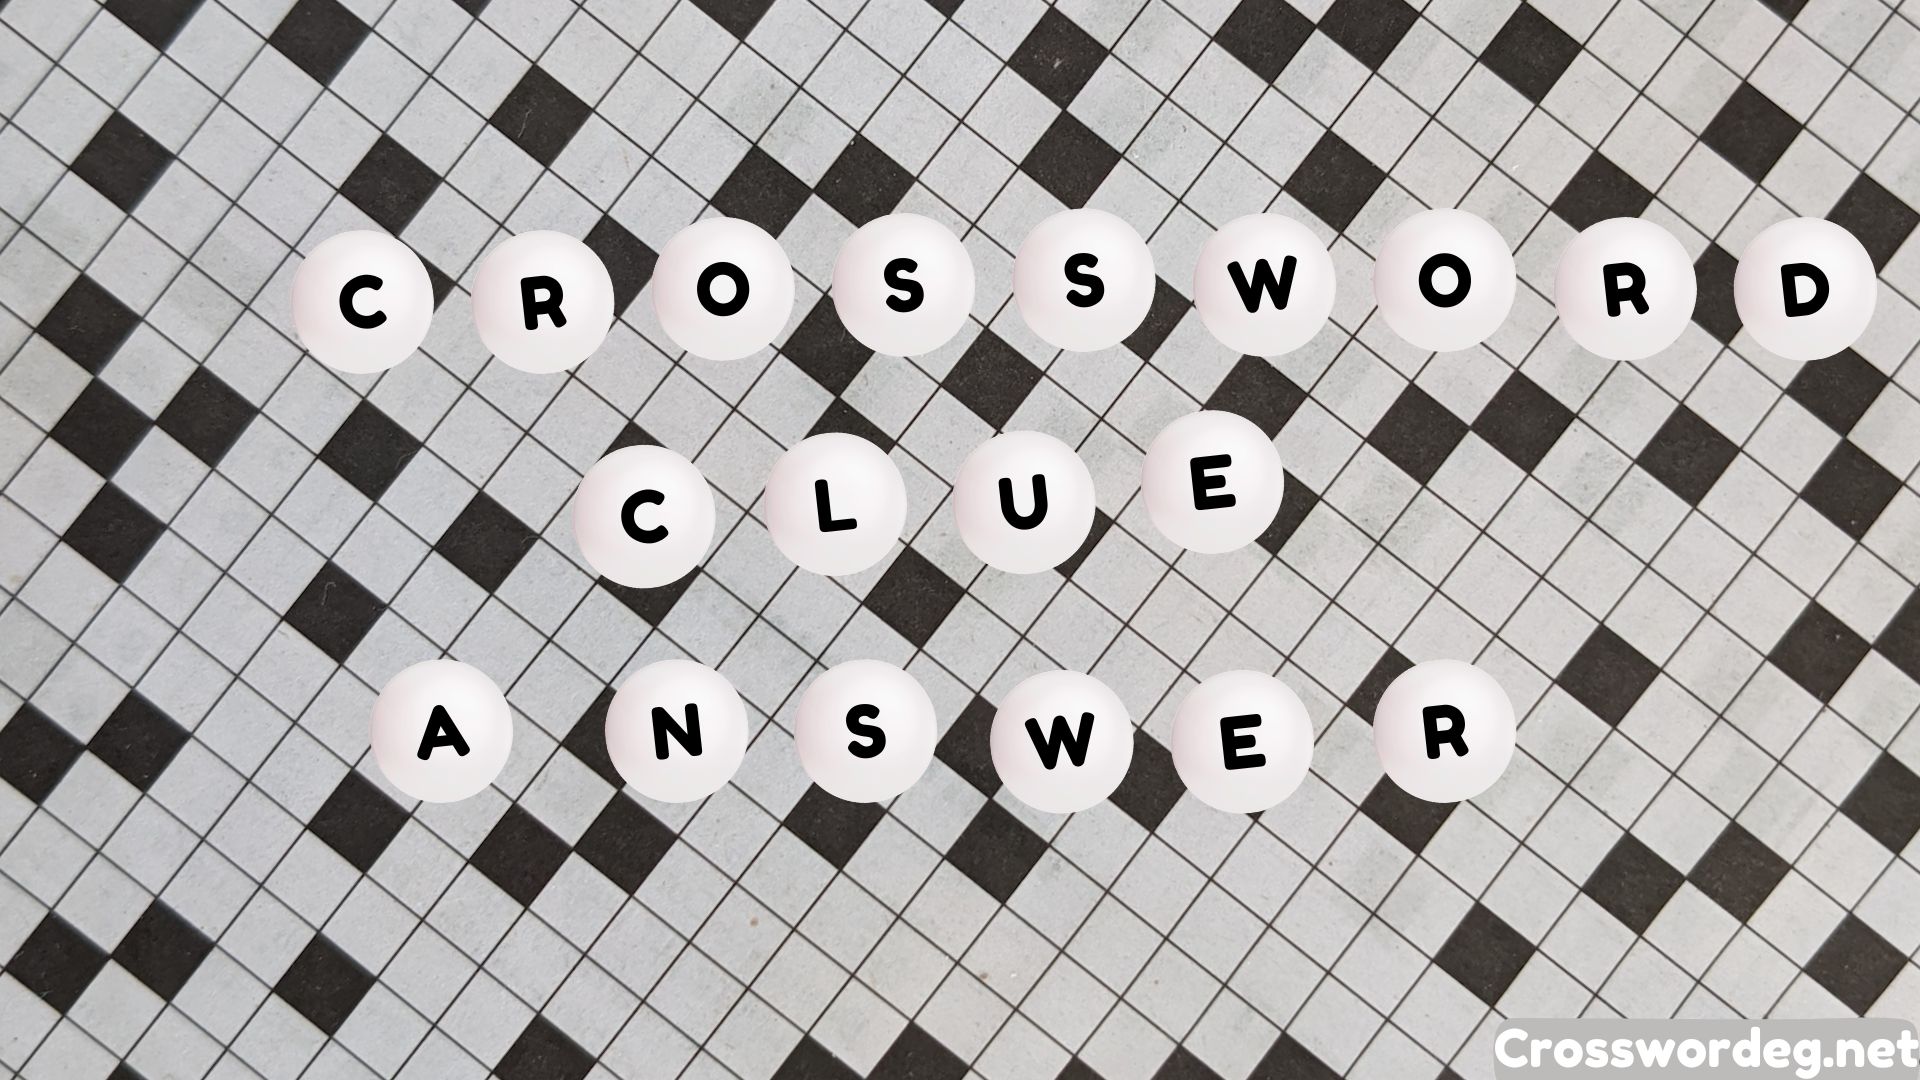 More awkward Crossword Clue Answers Crosswordeg net